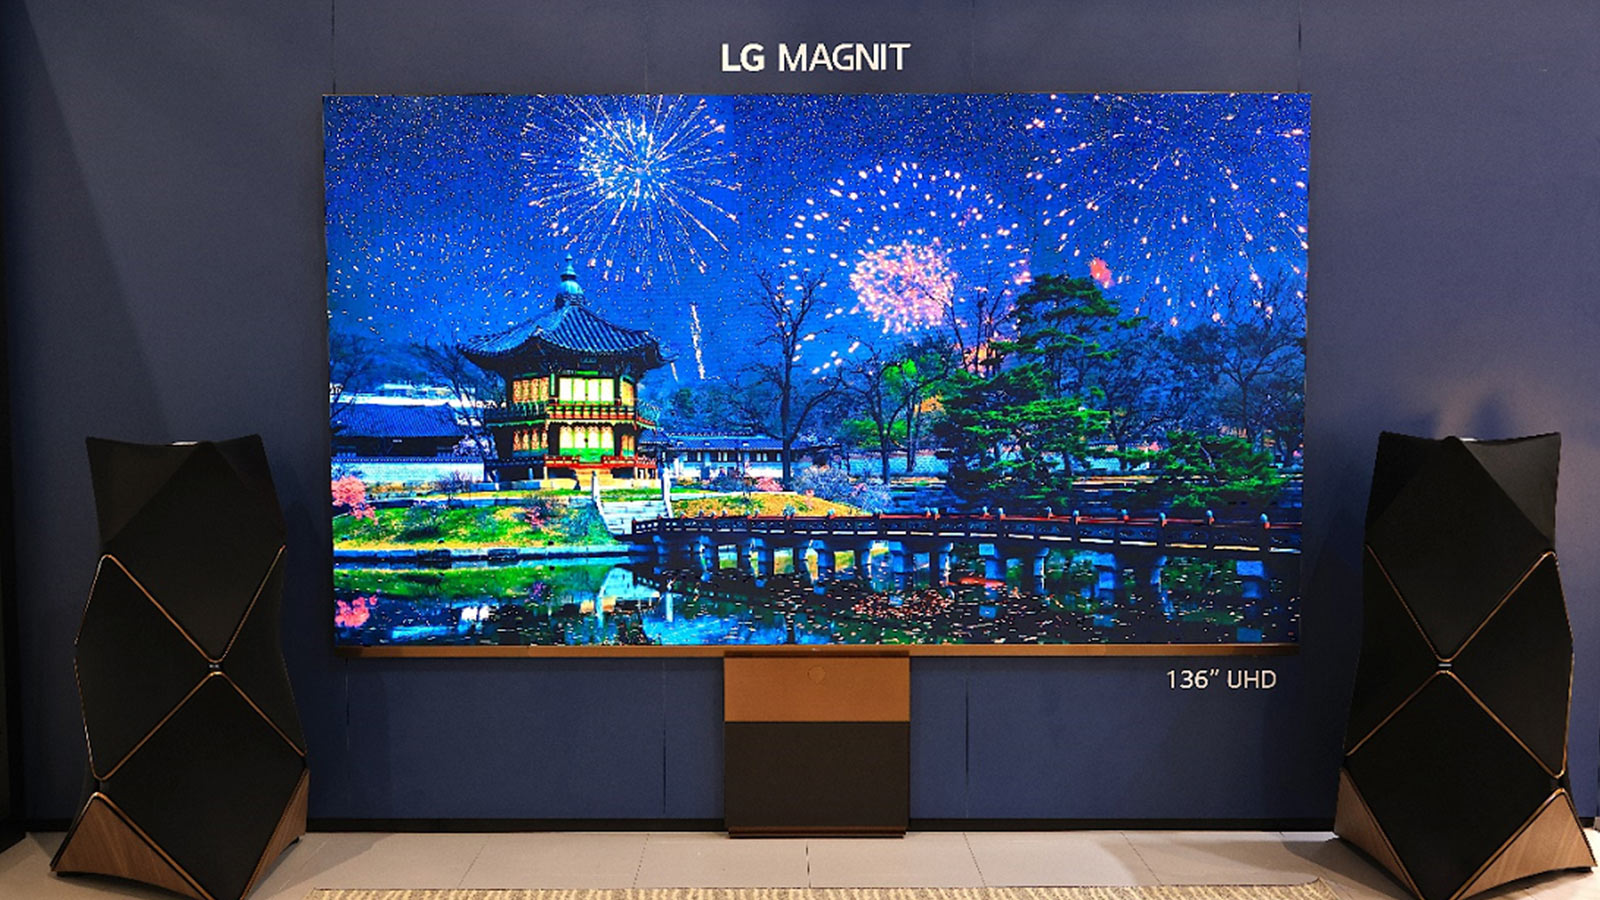 Bang & Olufsen x LG Magnit Micro LED TV